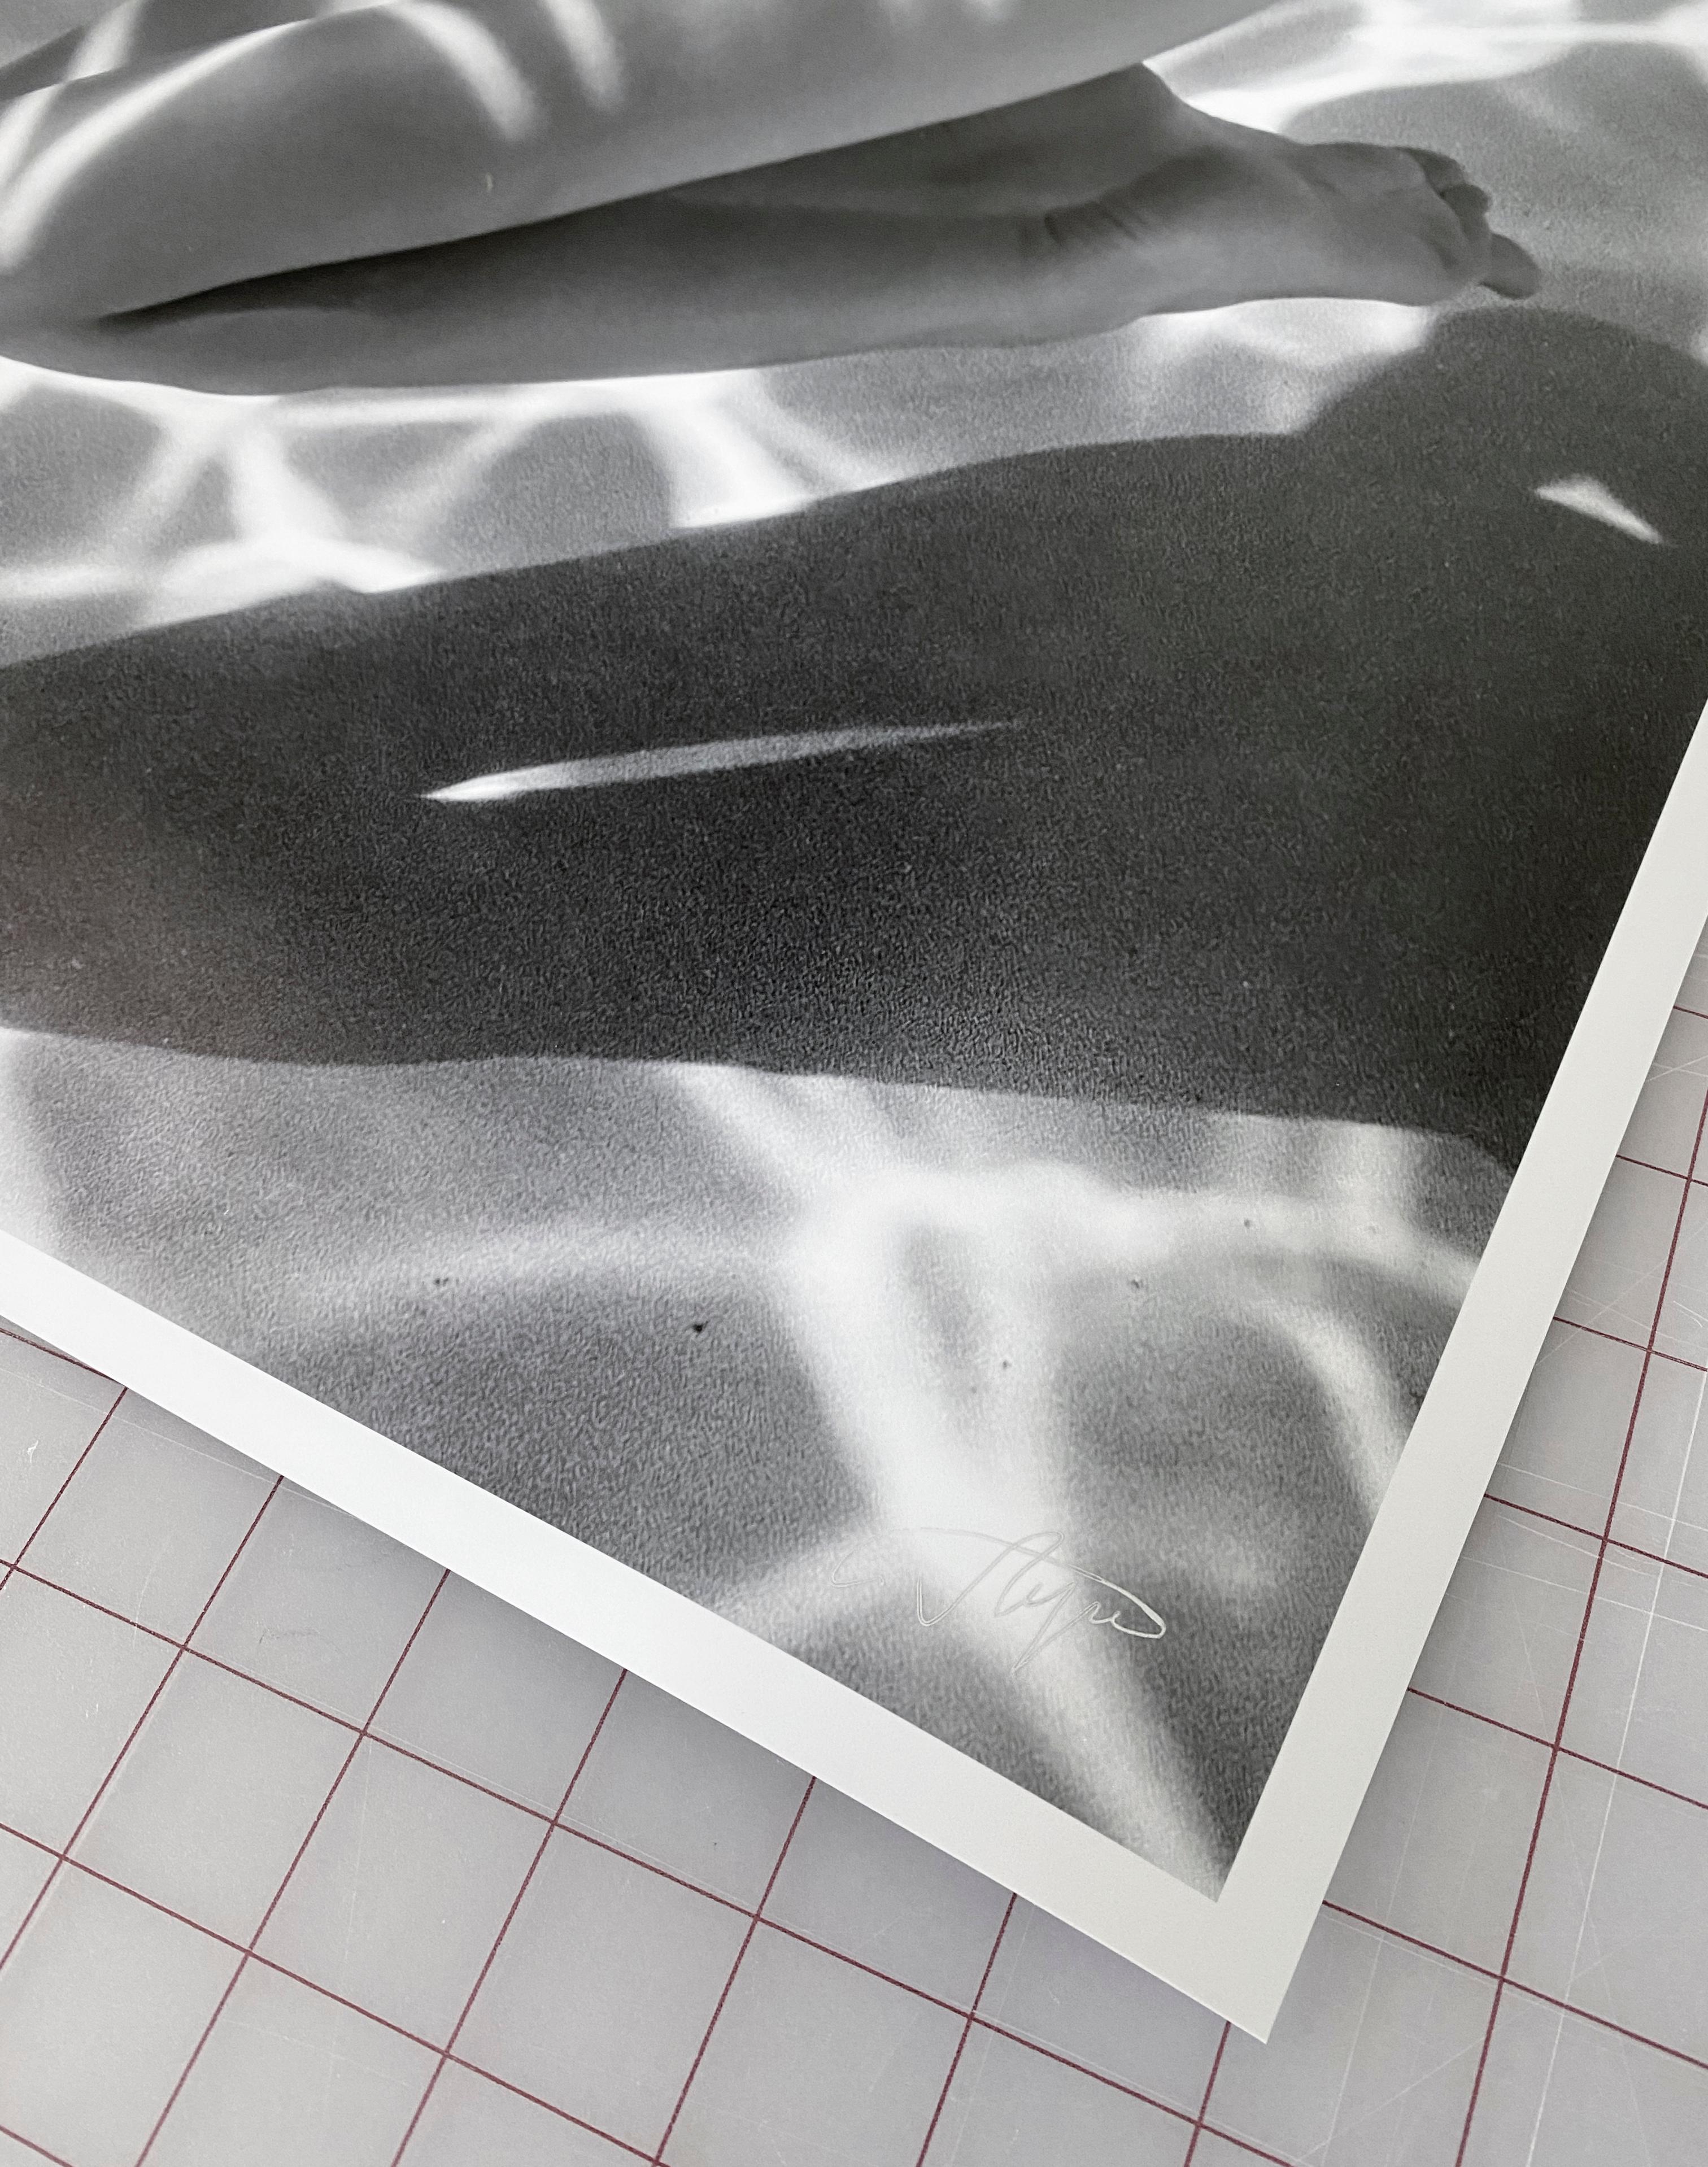 Wavering - underwater nude b&w photograph - archival pigment print 1